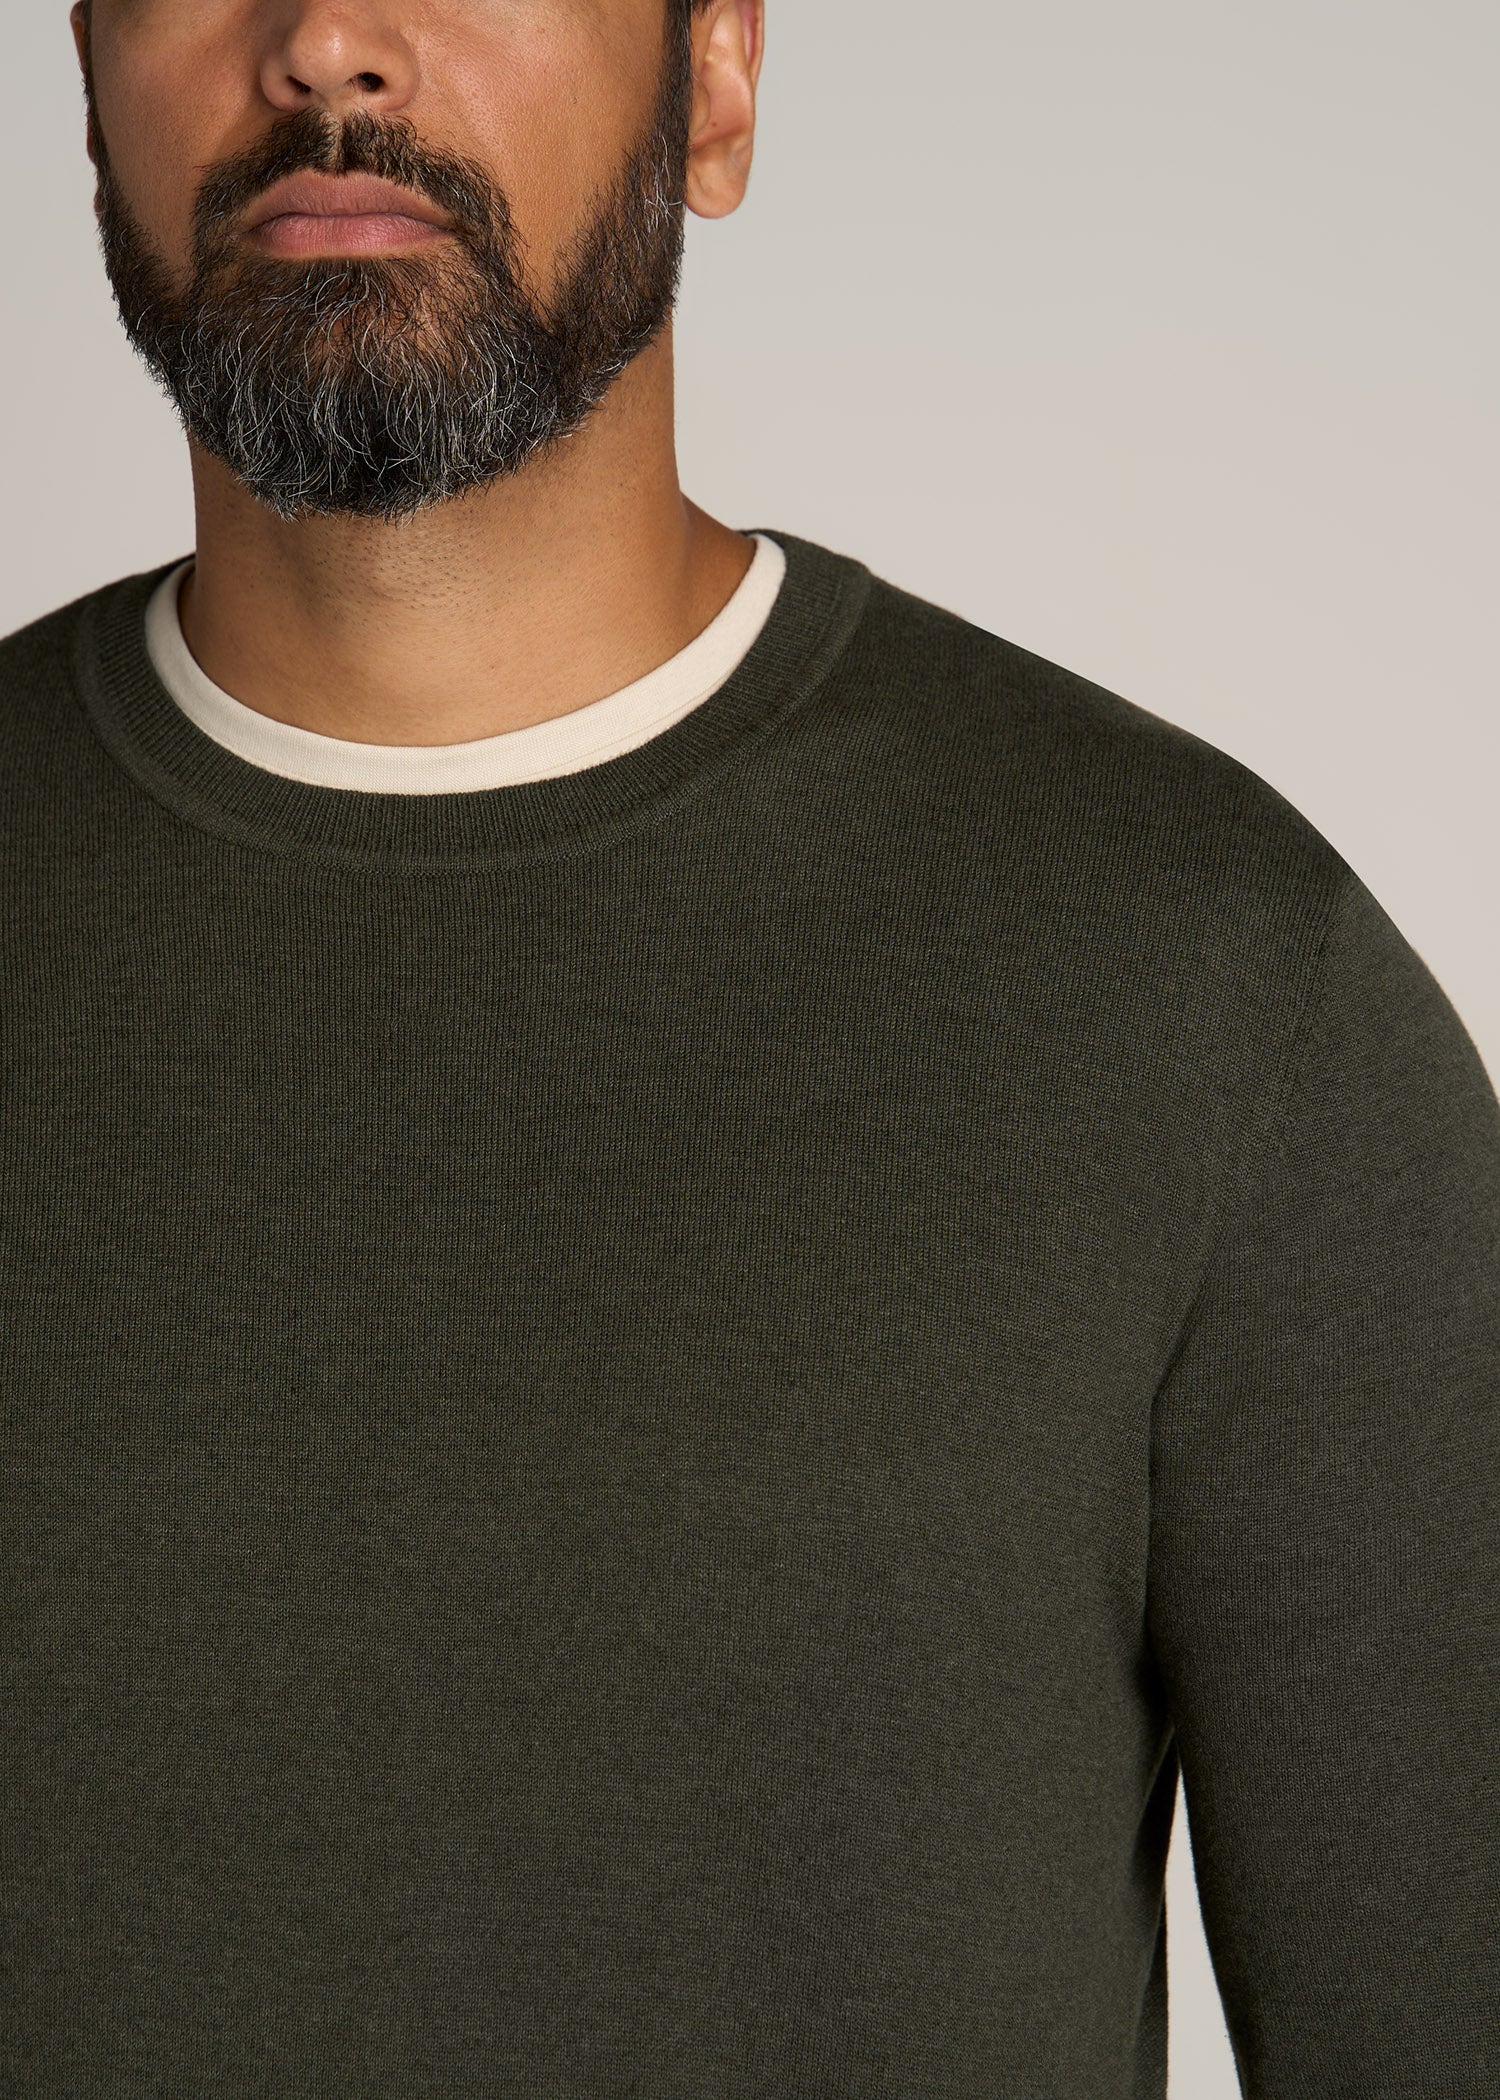 Everyday Crewneck Tall Men's Sweater in Dark Olive Green